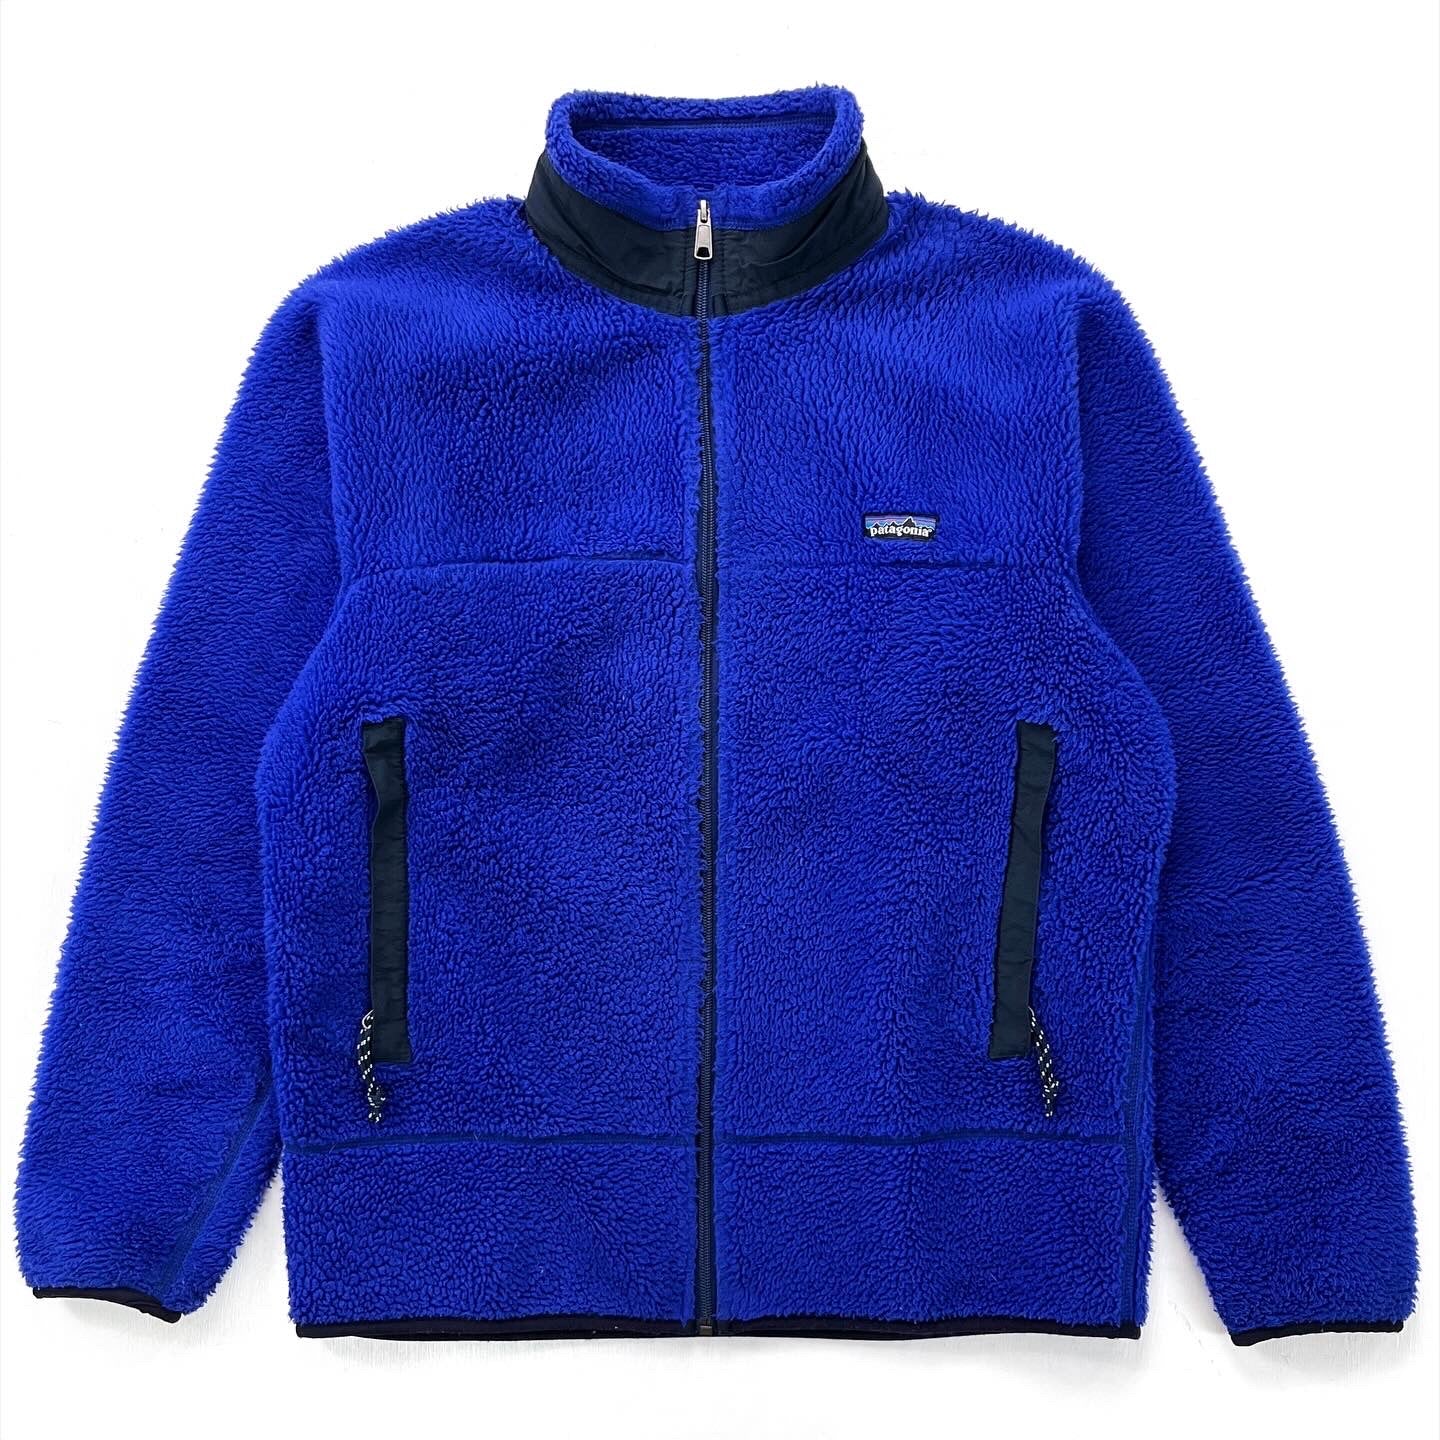 1996 Patagonia Retro-X Fleece Jacket, Blueberry & Spruce (M)